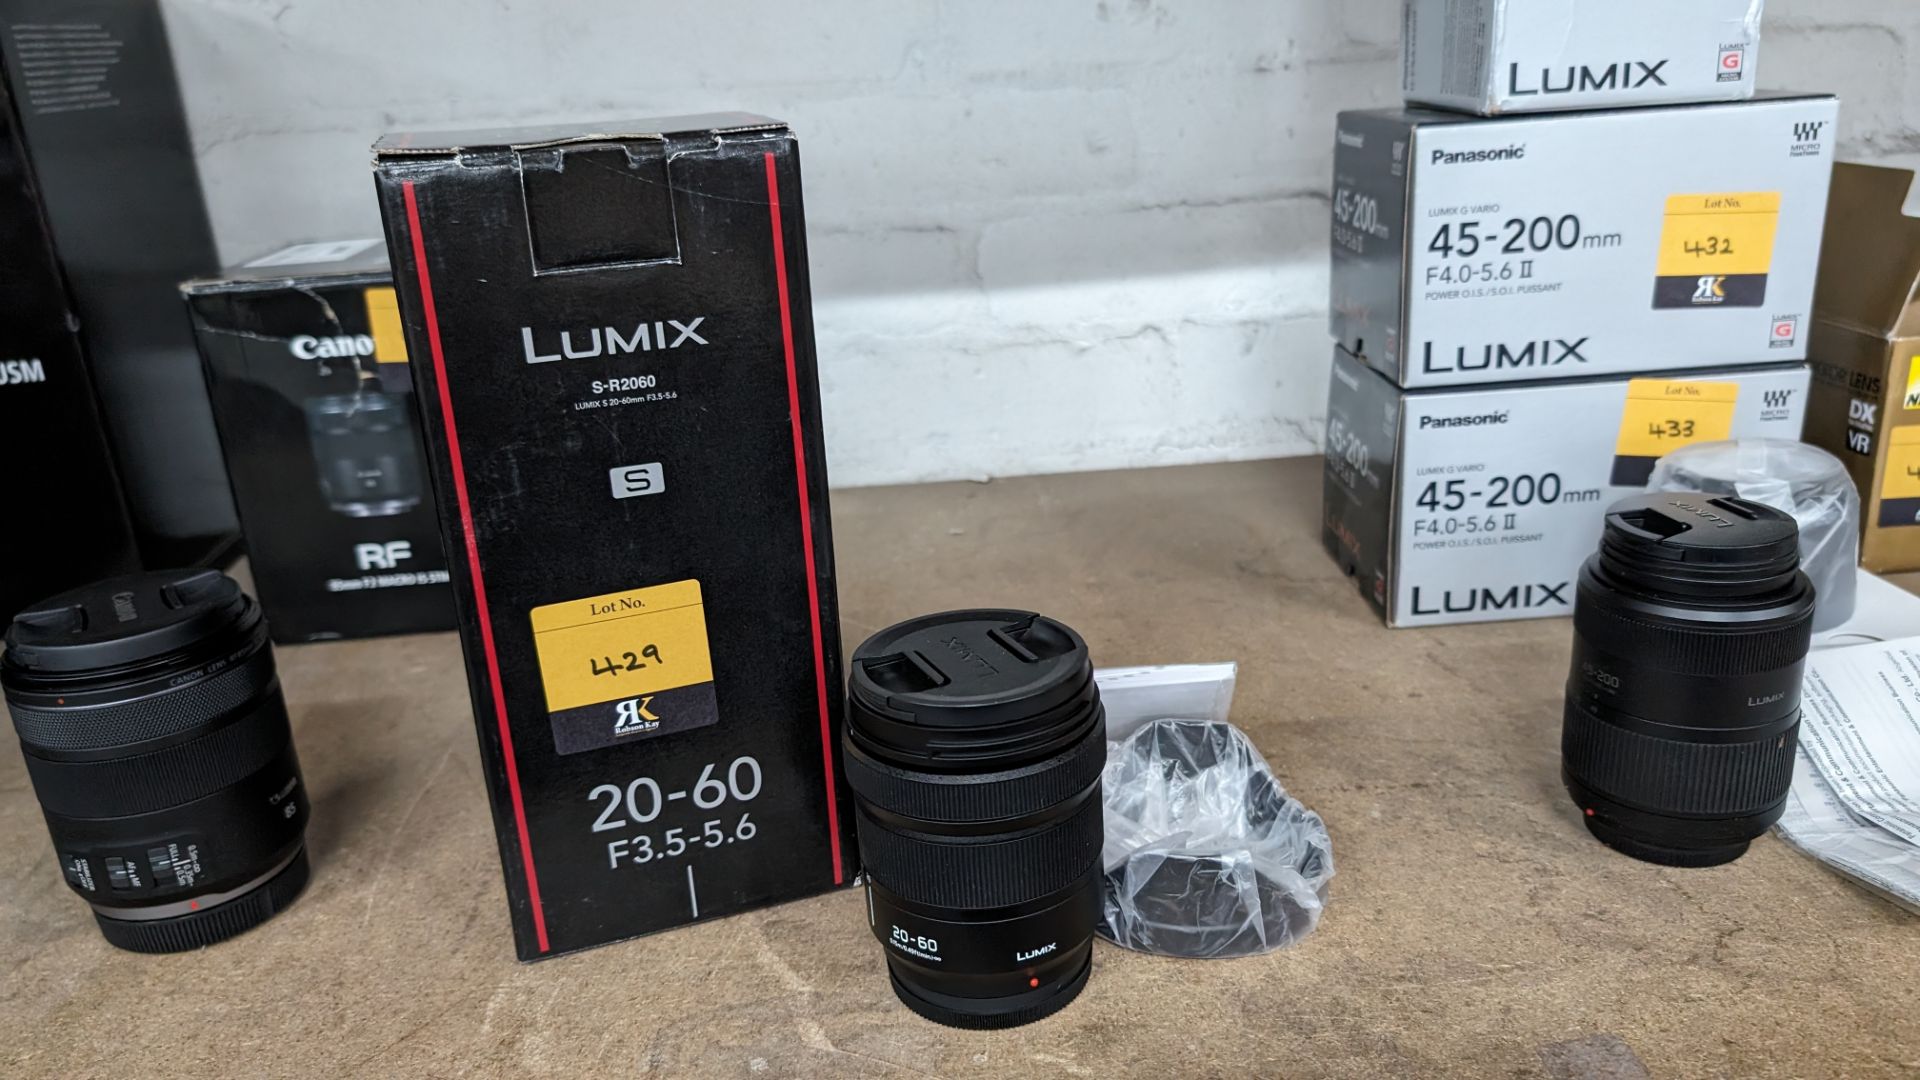 Panasonic Lumix model S-R2060 lens, 20-60mm, f3.5-5.6 - Image 2 of 14